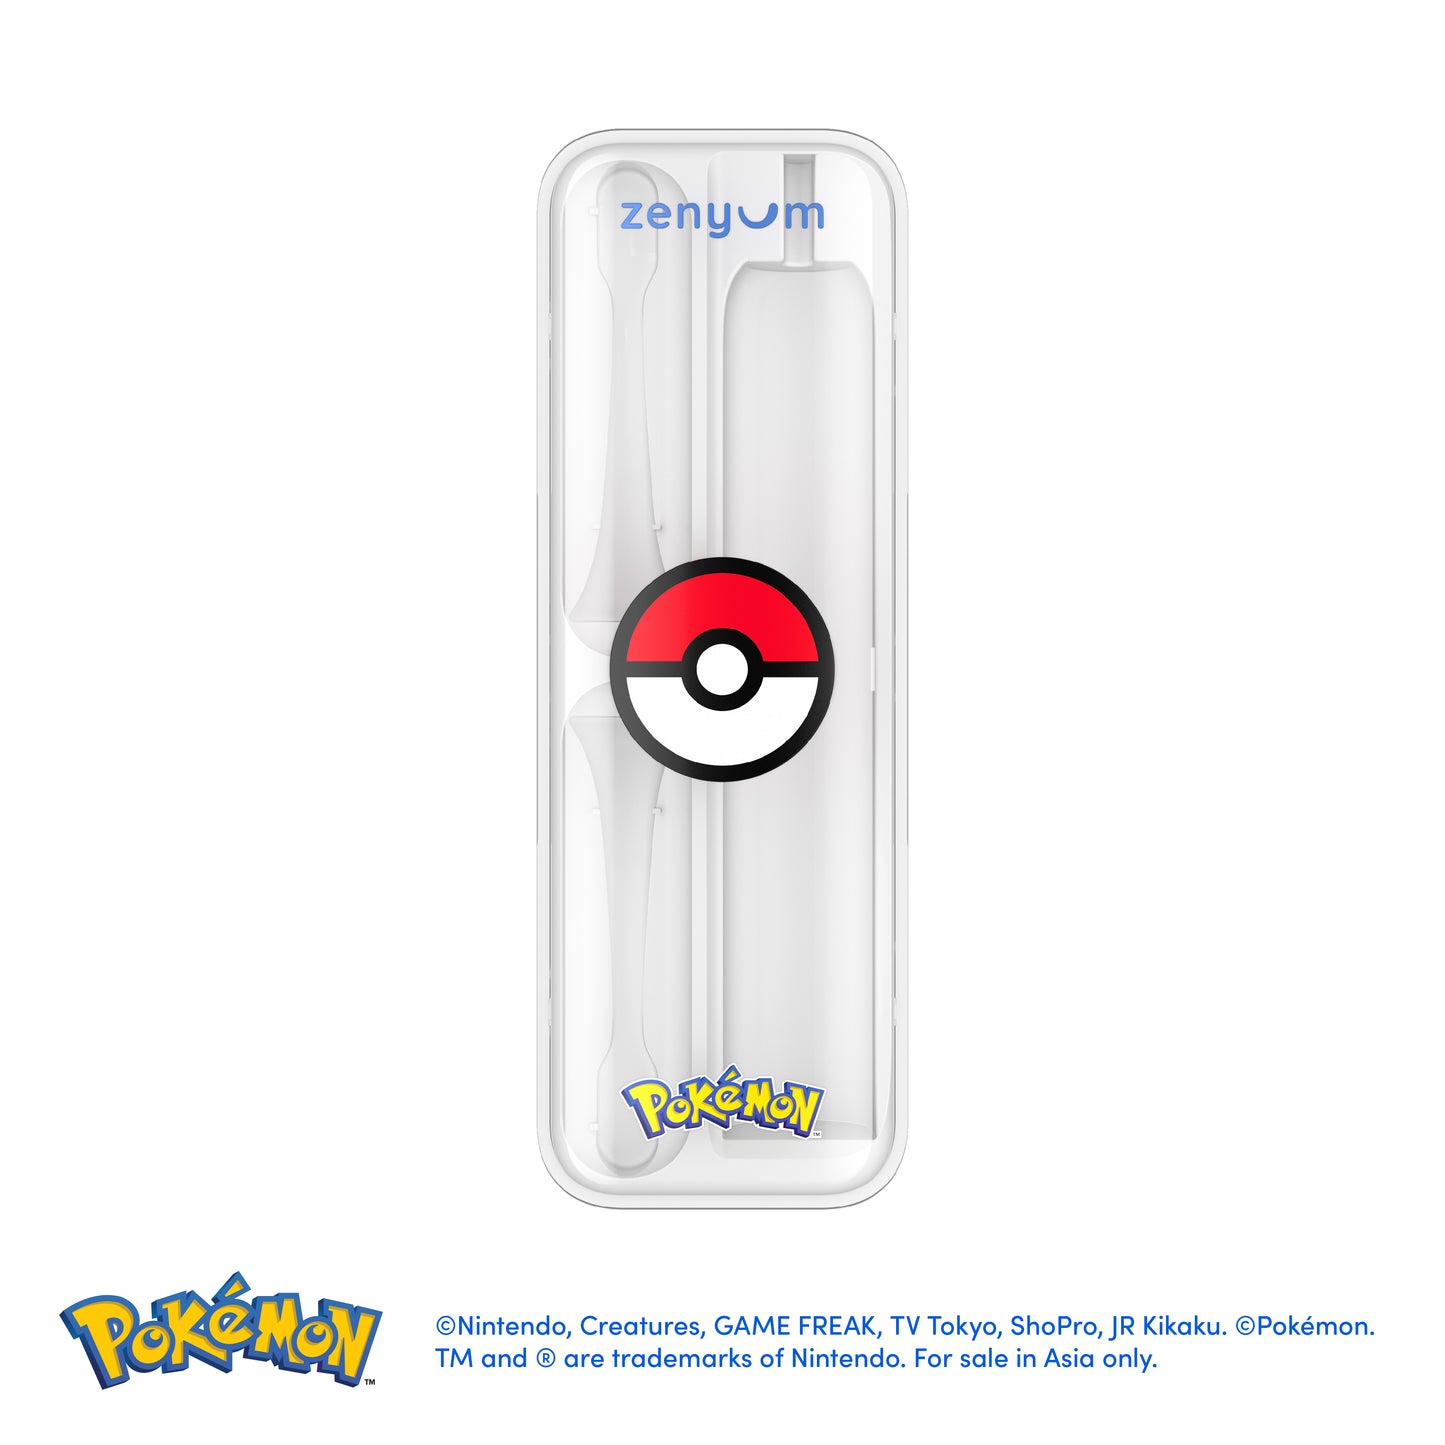 ZenyumSonic™ Go Pokémon Collection - Grass-Type Edition